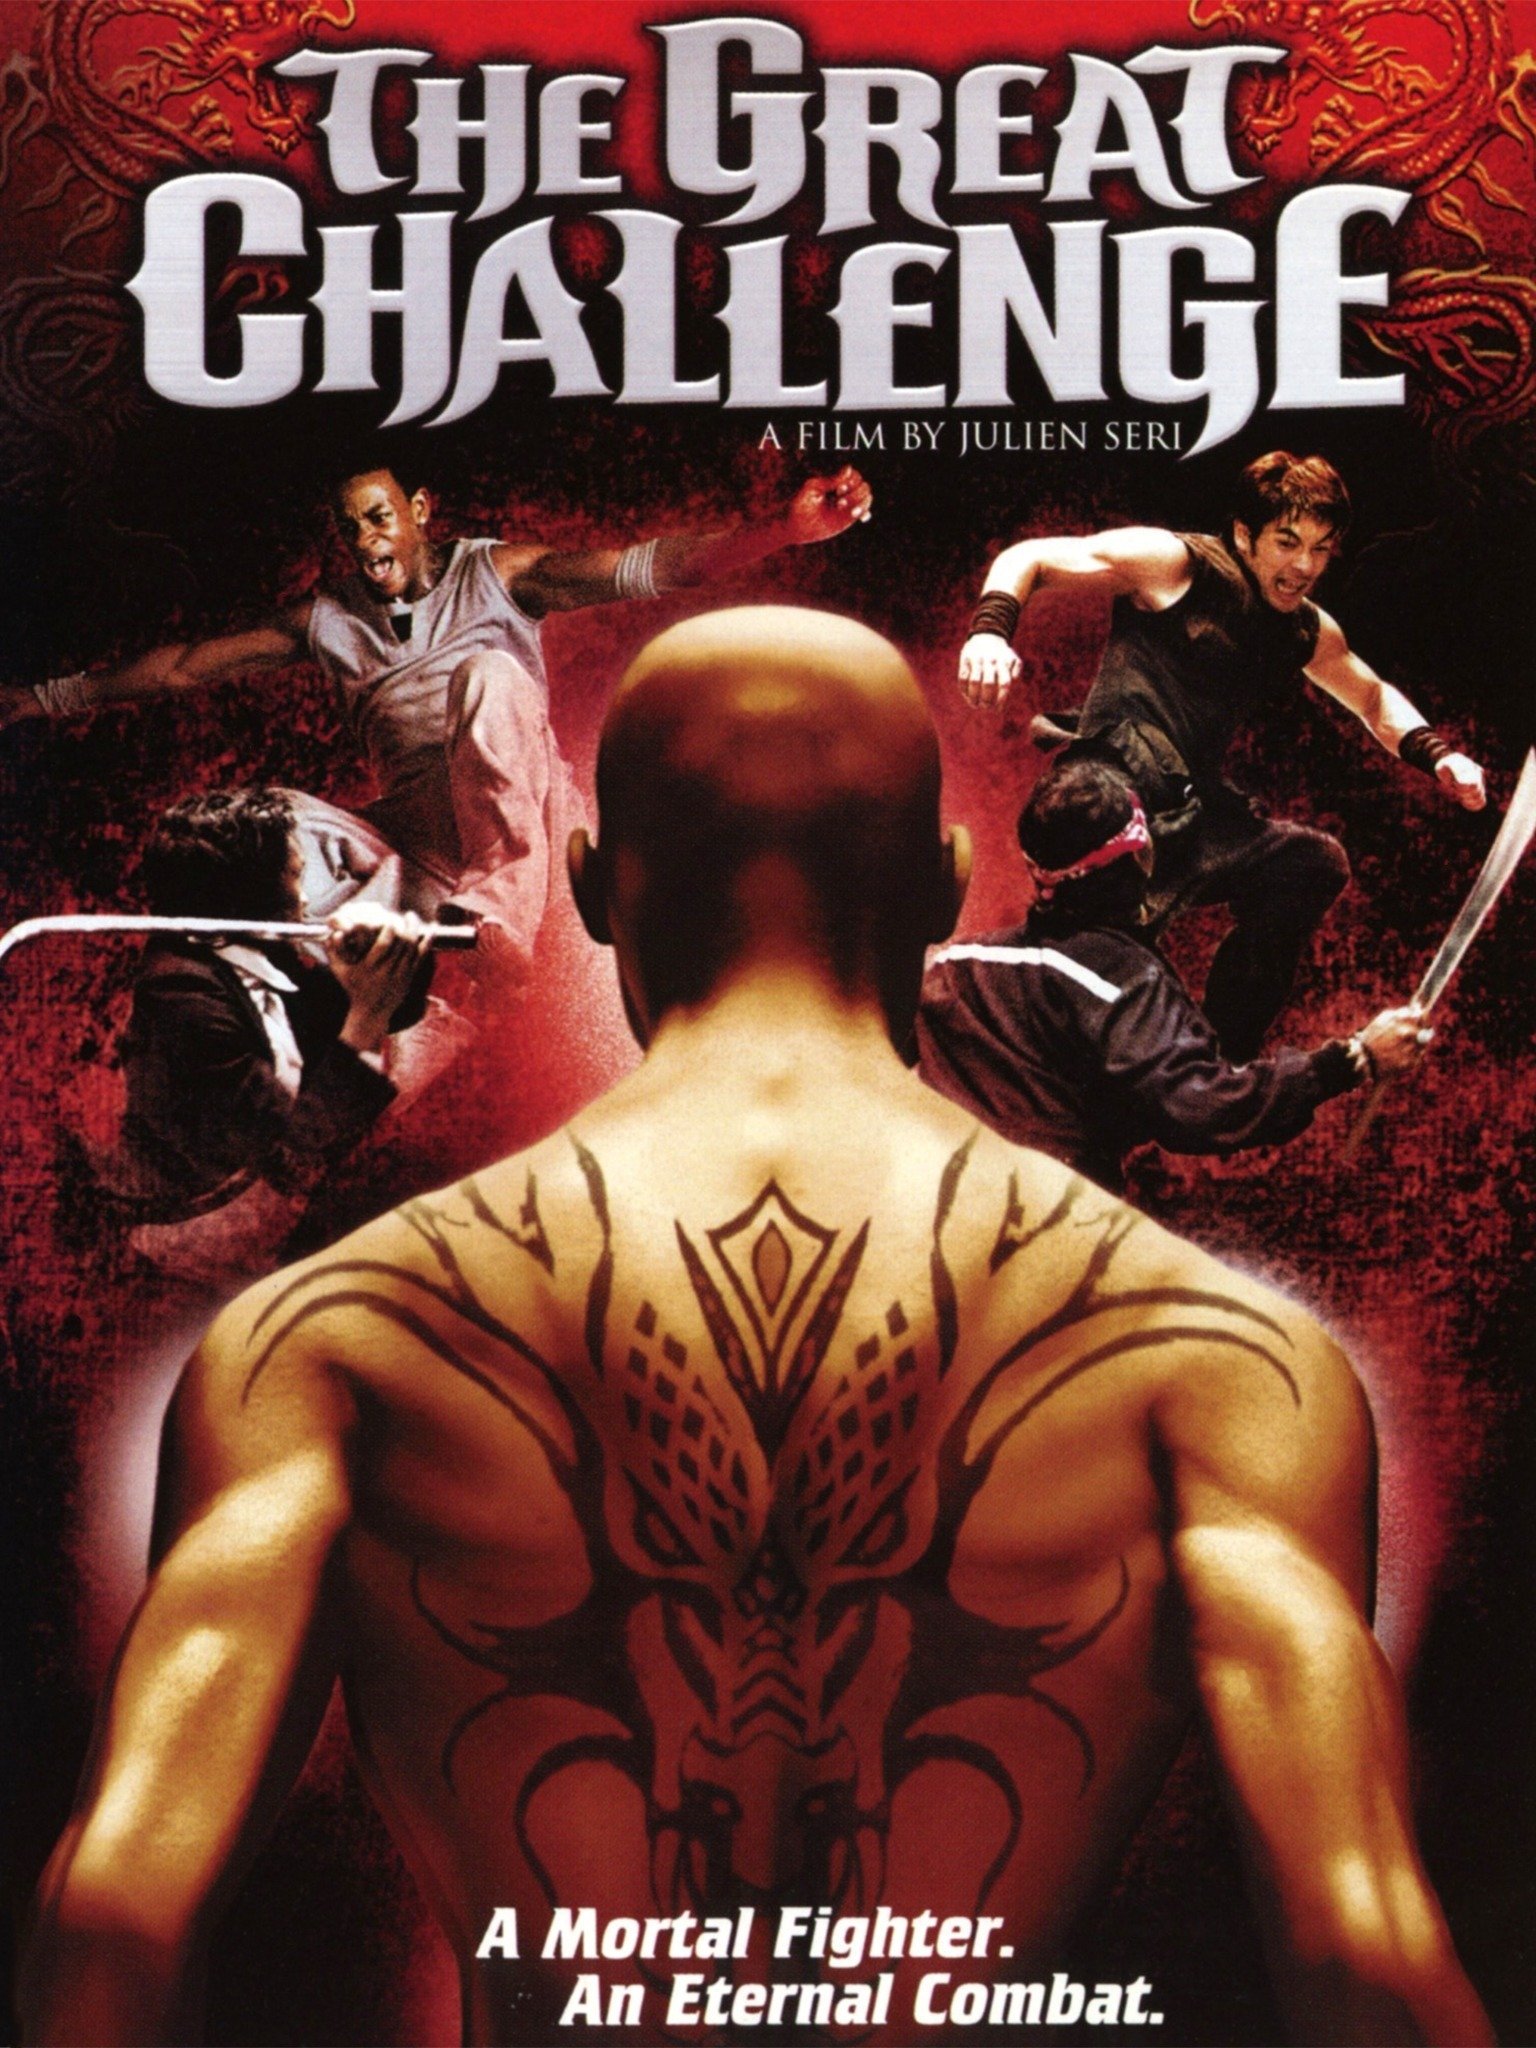 challenge 2 poster